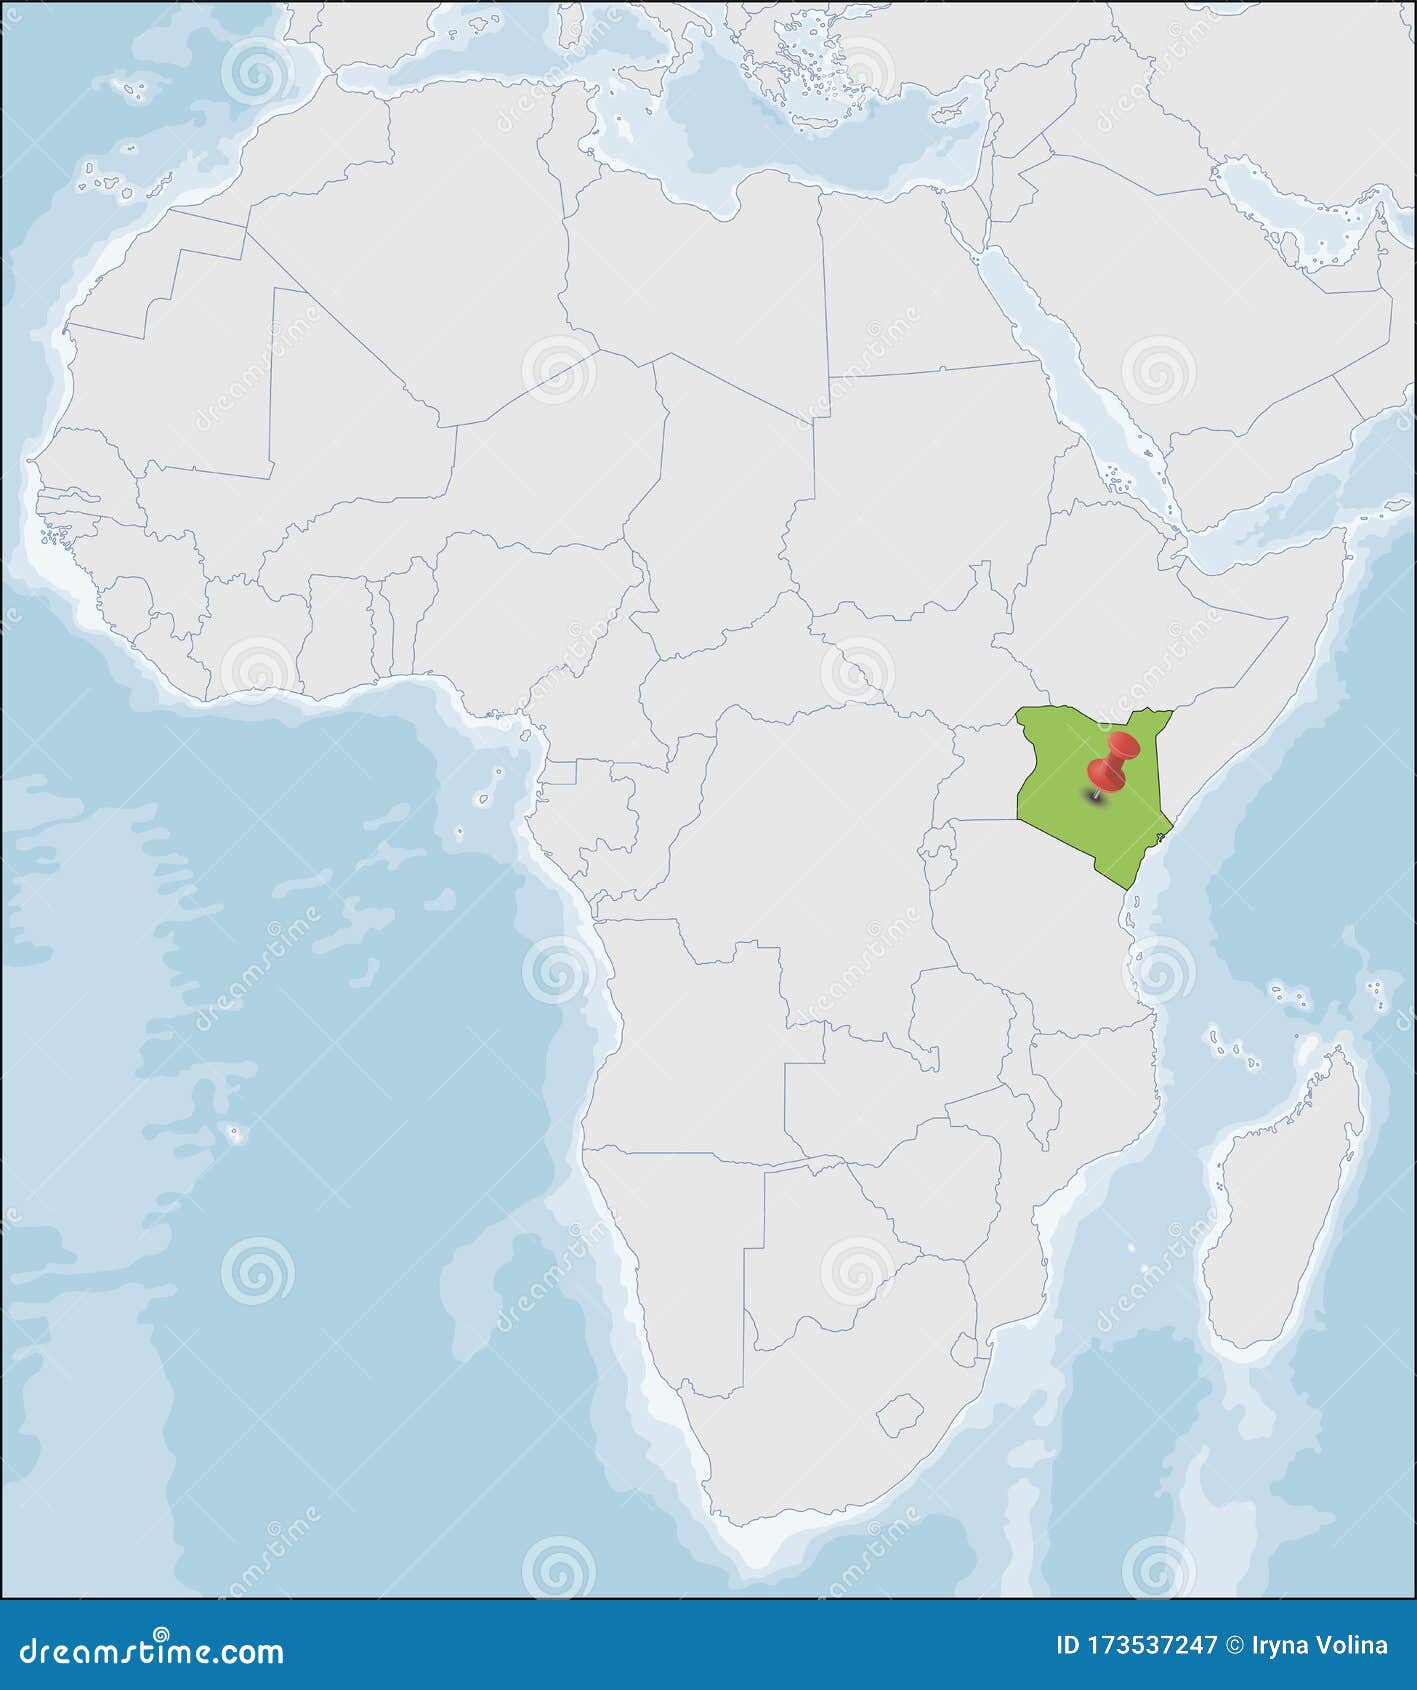 Republic of Kenya Location on Africa Map Stock Vector - Illustration of ...